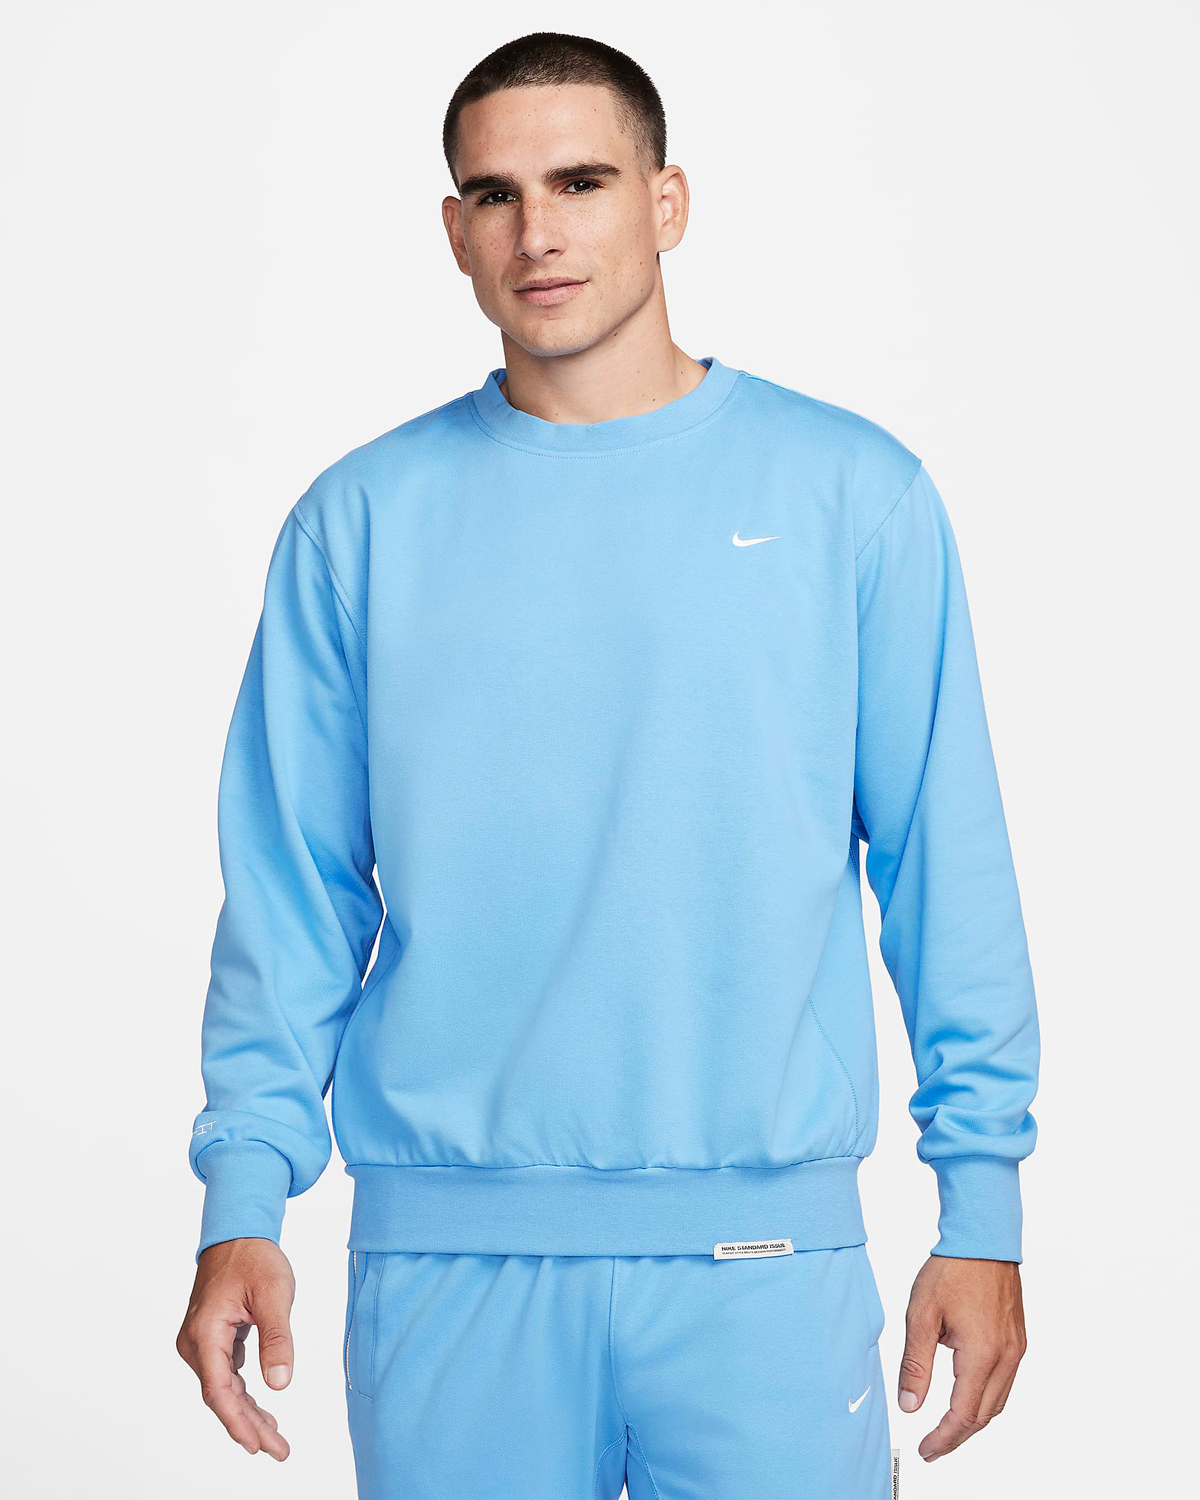 Nike Air Max 1 University Blue Shirts Hats Clothing Outfits